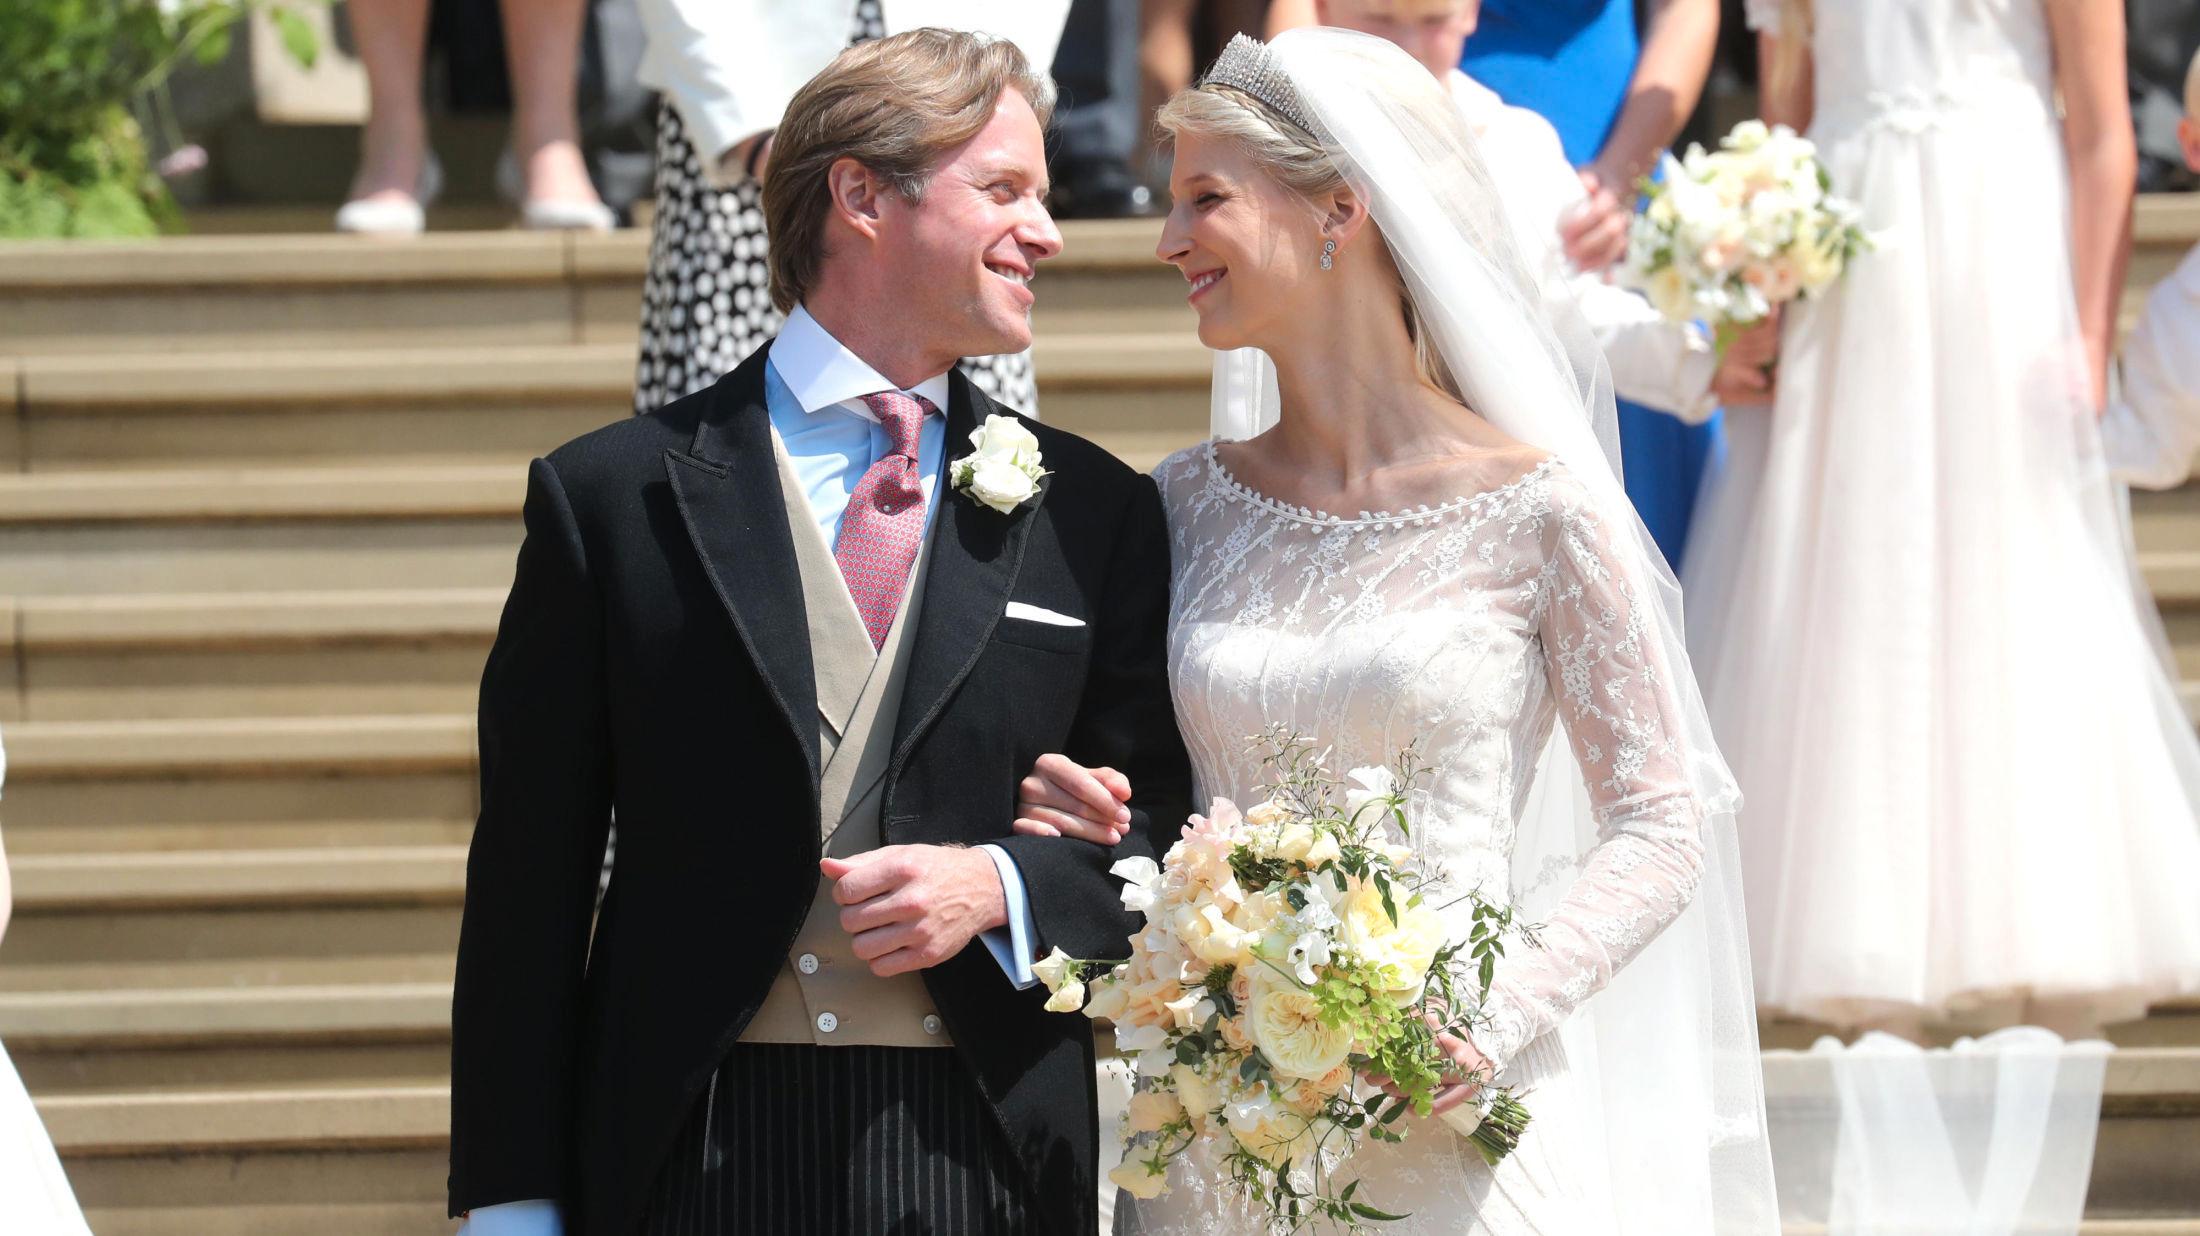 SMIDD I HYMES LENKER: Thomas Kingston og Lady Gabriella Windsor giftet seg denne helgen. Foto: Pa Photos